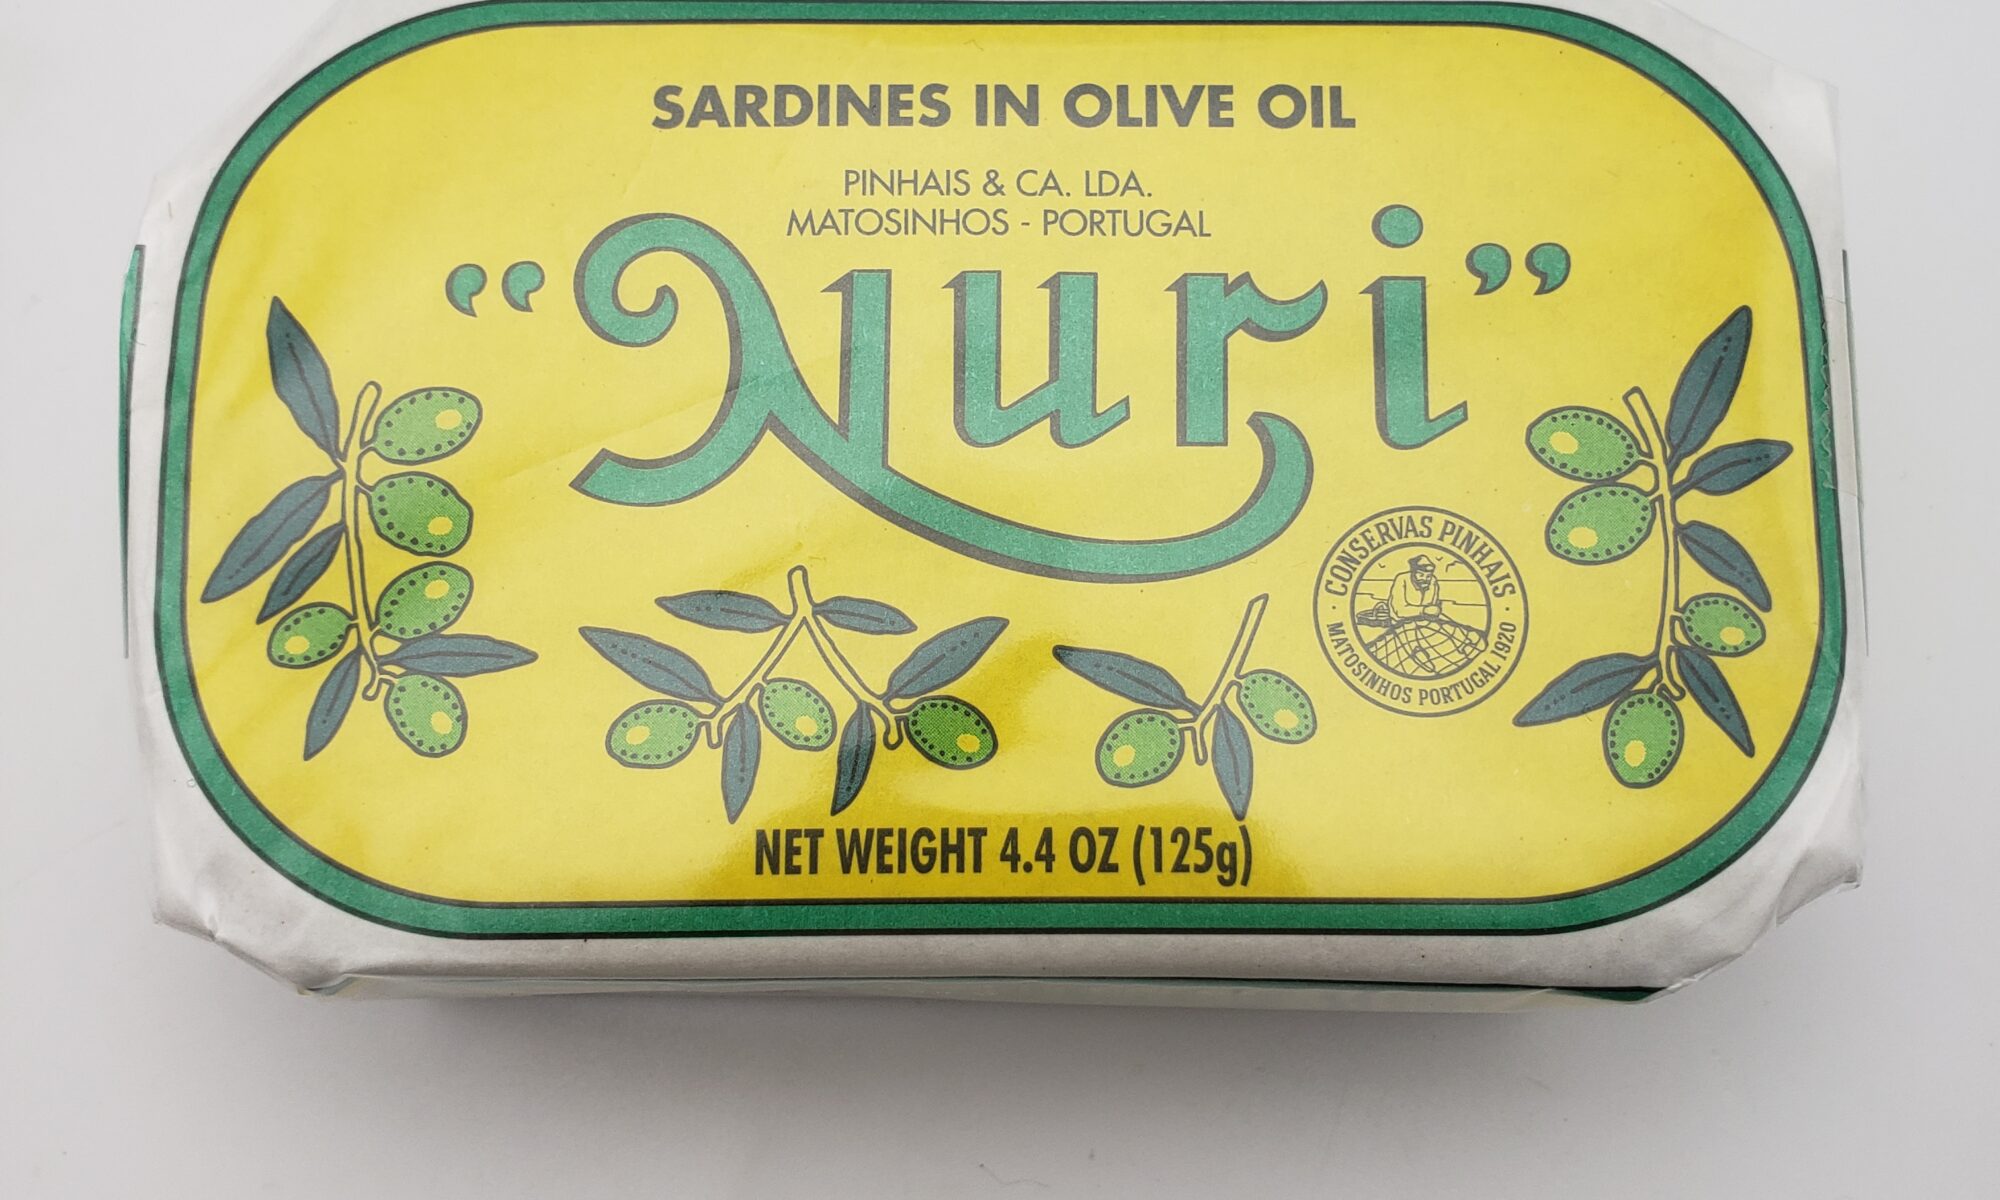 Image of Nuri sardines in olive oil